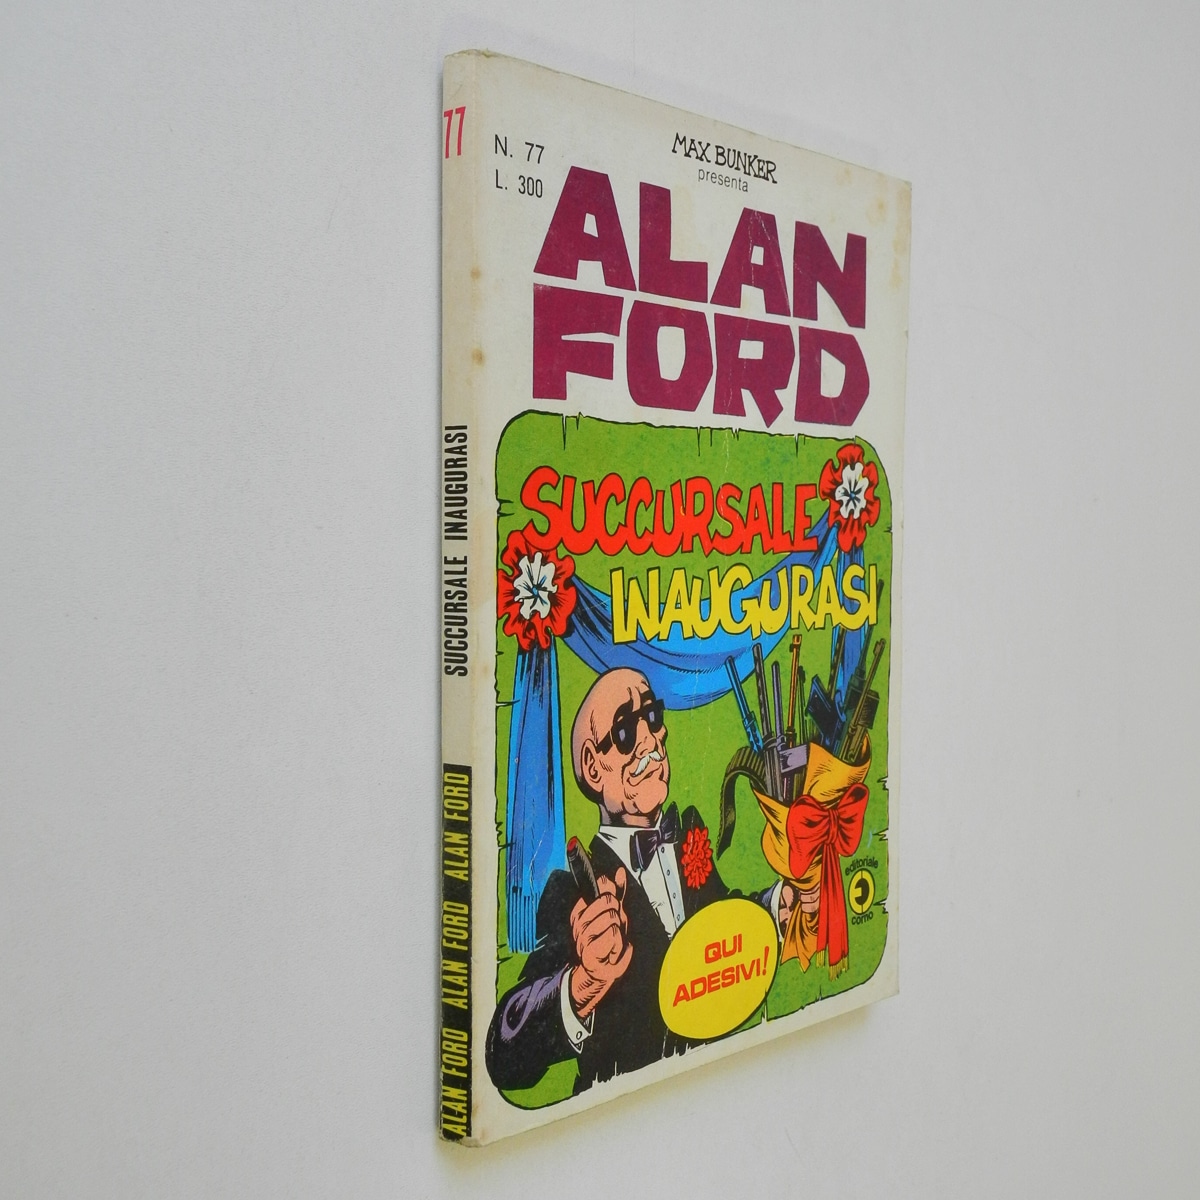 Alan Ford n. 77 con Adesivi Succursale inaugurasi